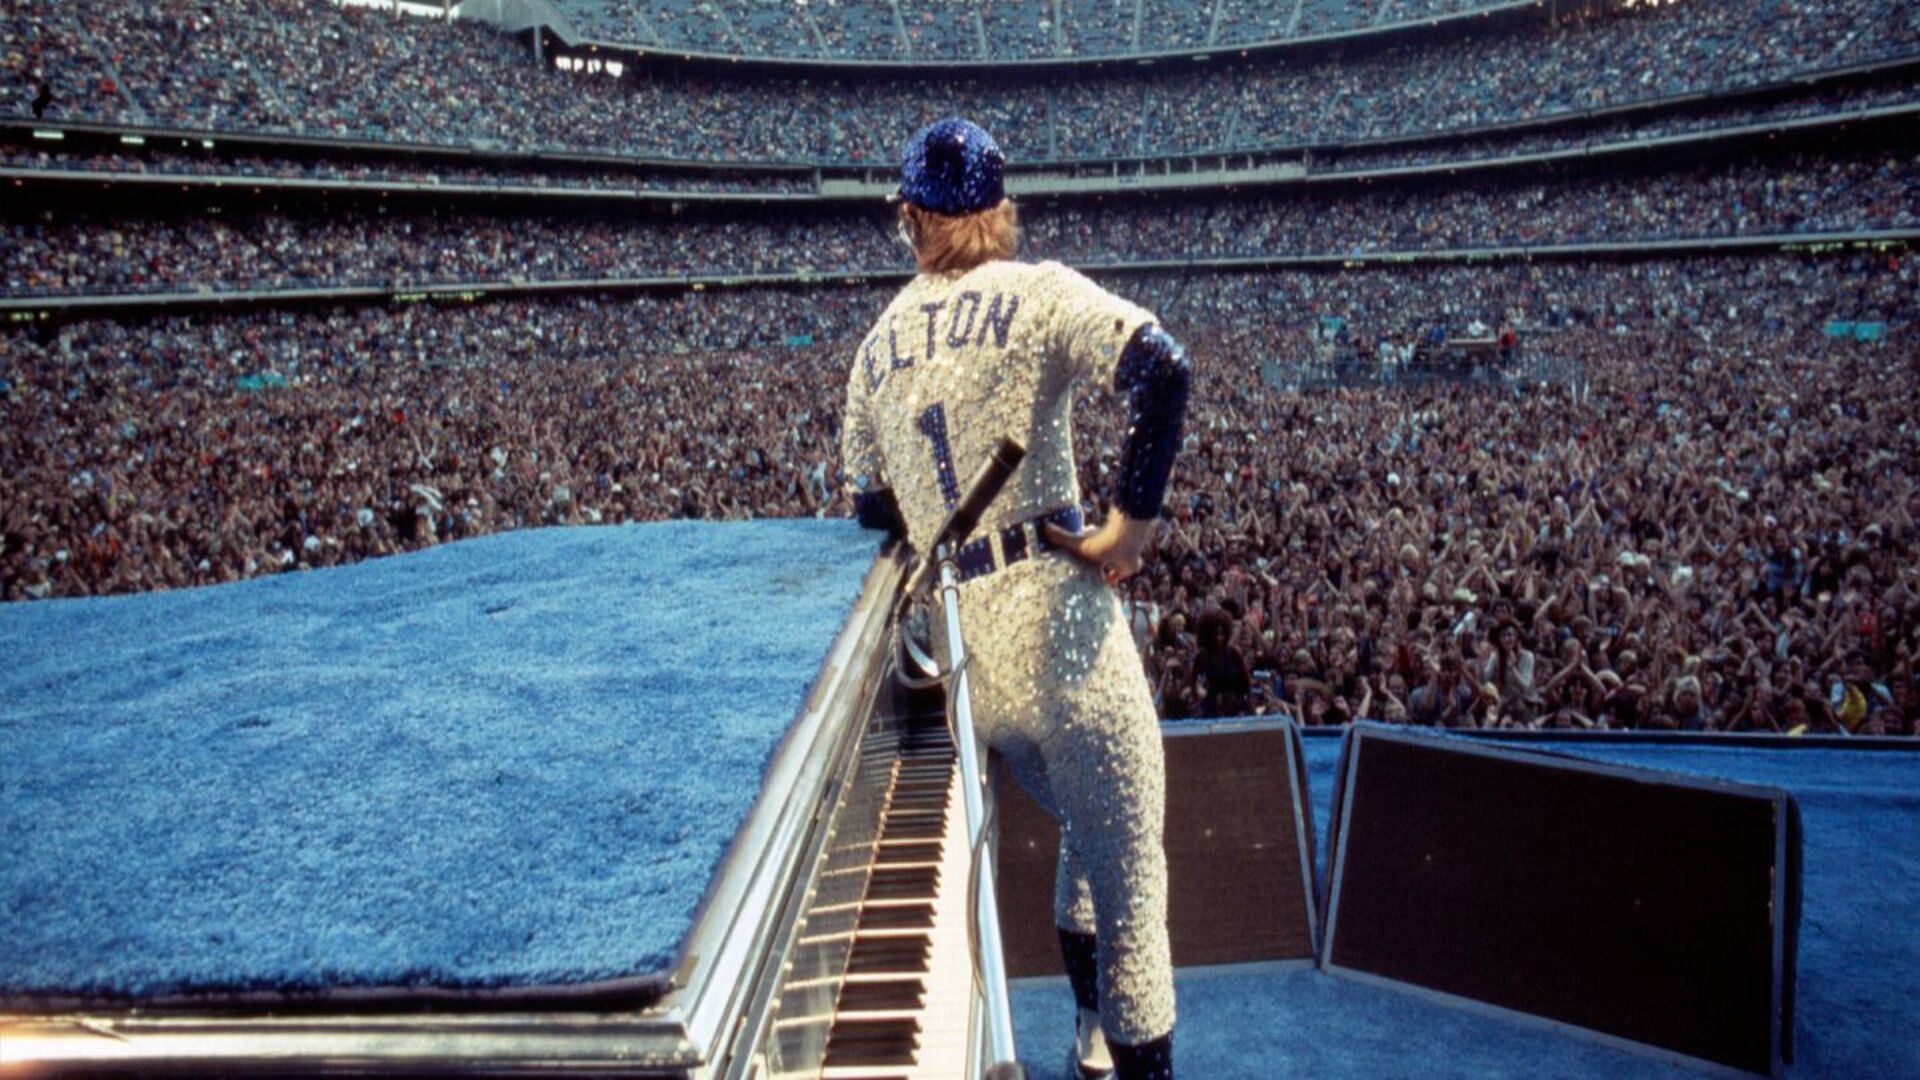 Sir Elton John&#039;s concert in 1975 inside the Dodgers Stadium (Image via eltonjohn.com)